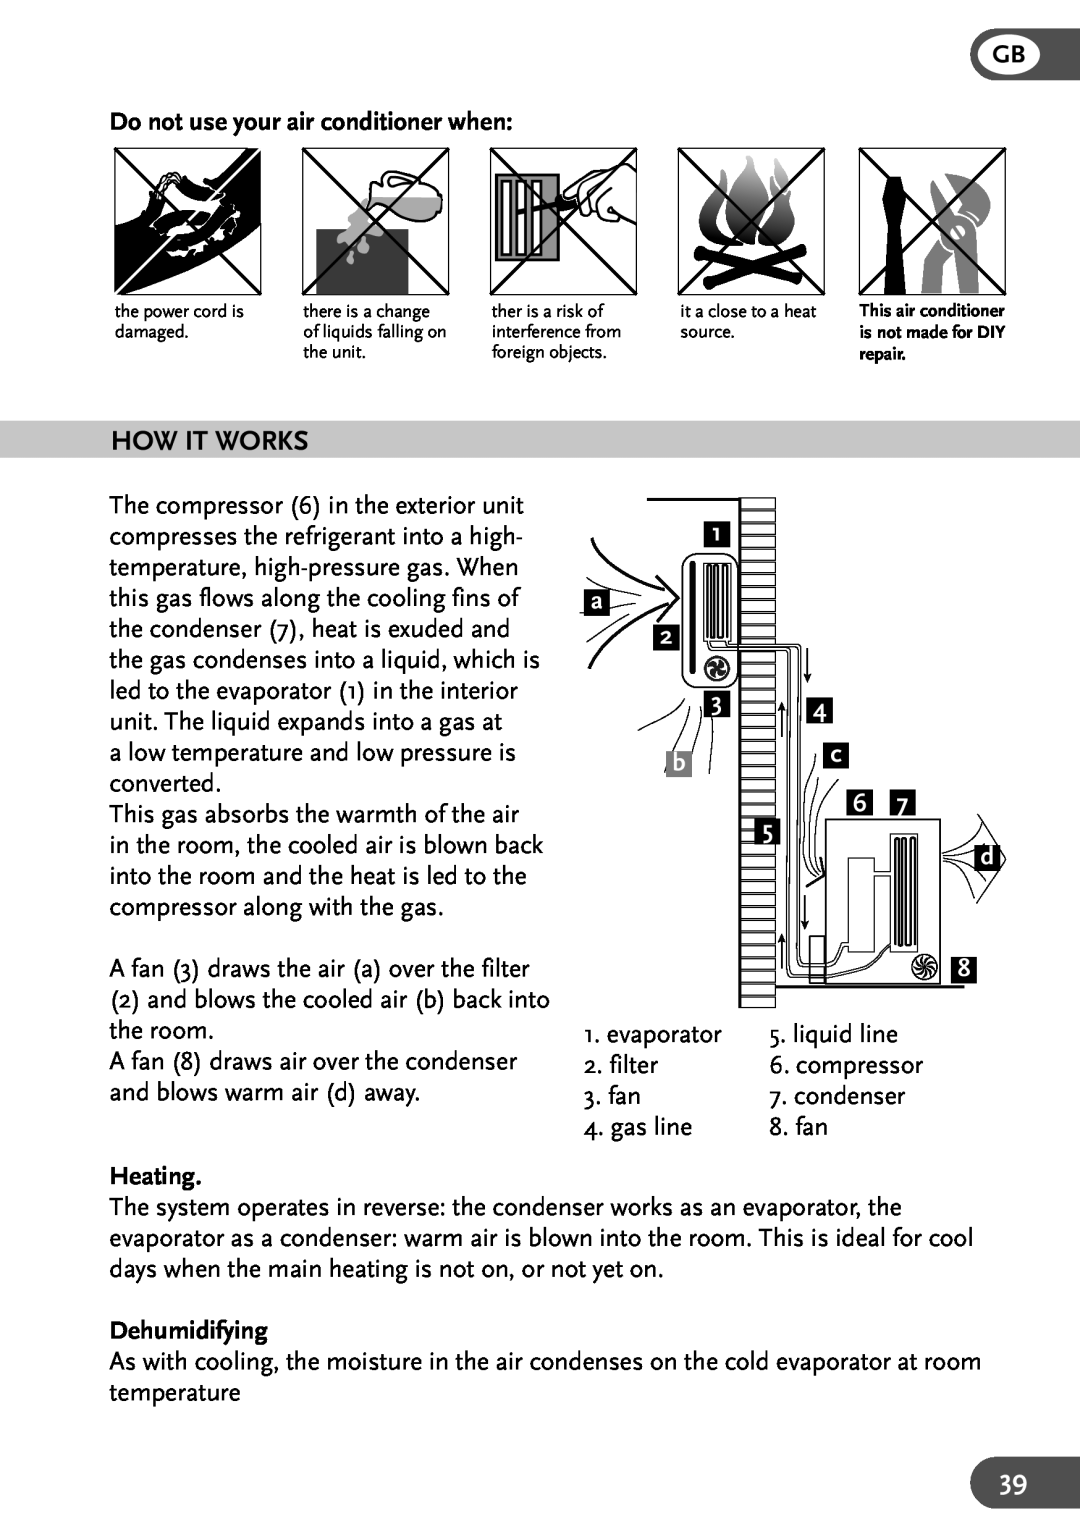 Amcor HW12KE, HWAM12KE, HWAM9KE How It Works, GB Do not use your air conditioner when, 2 3 b, 4 c, Heating, Dehumidifying 